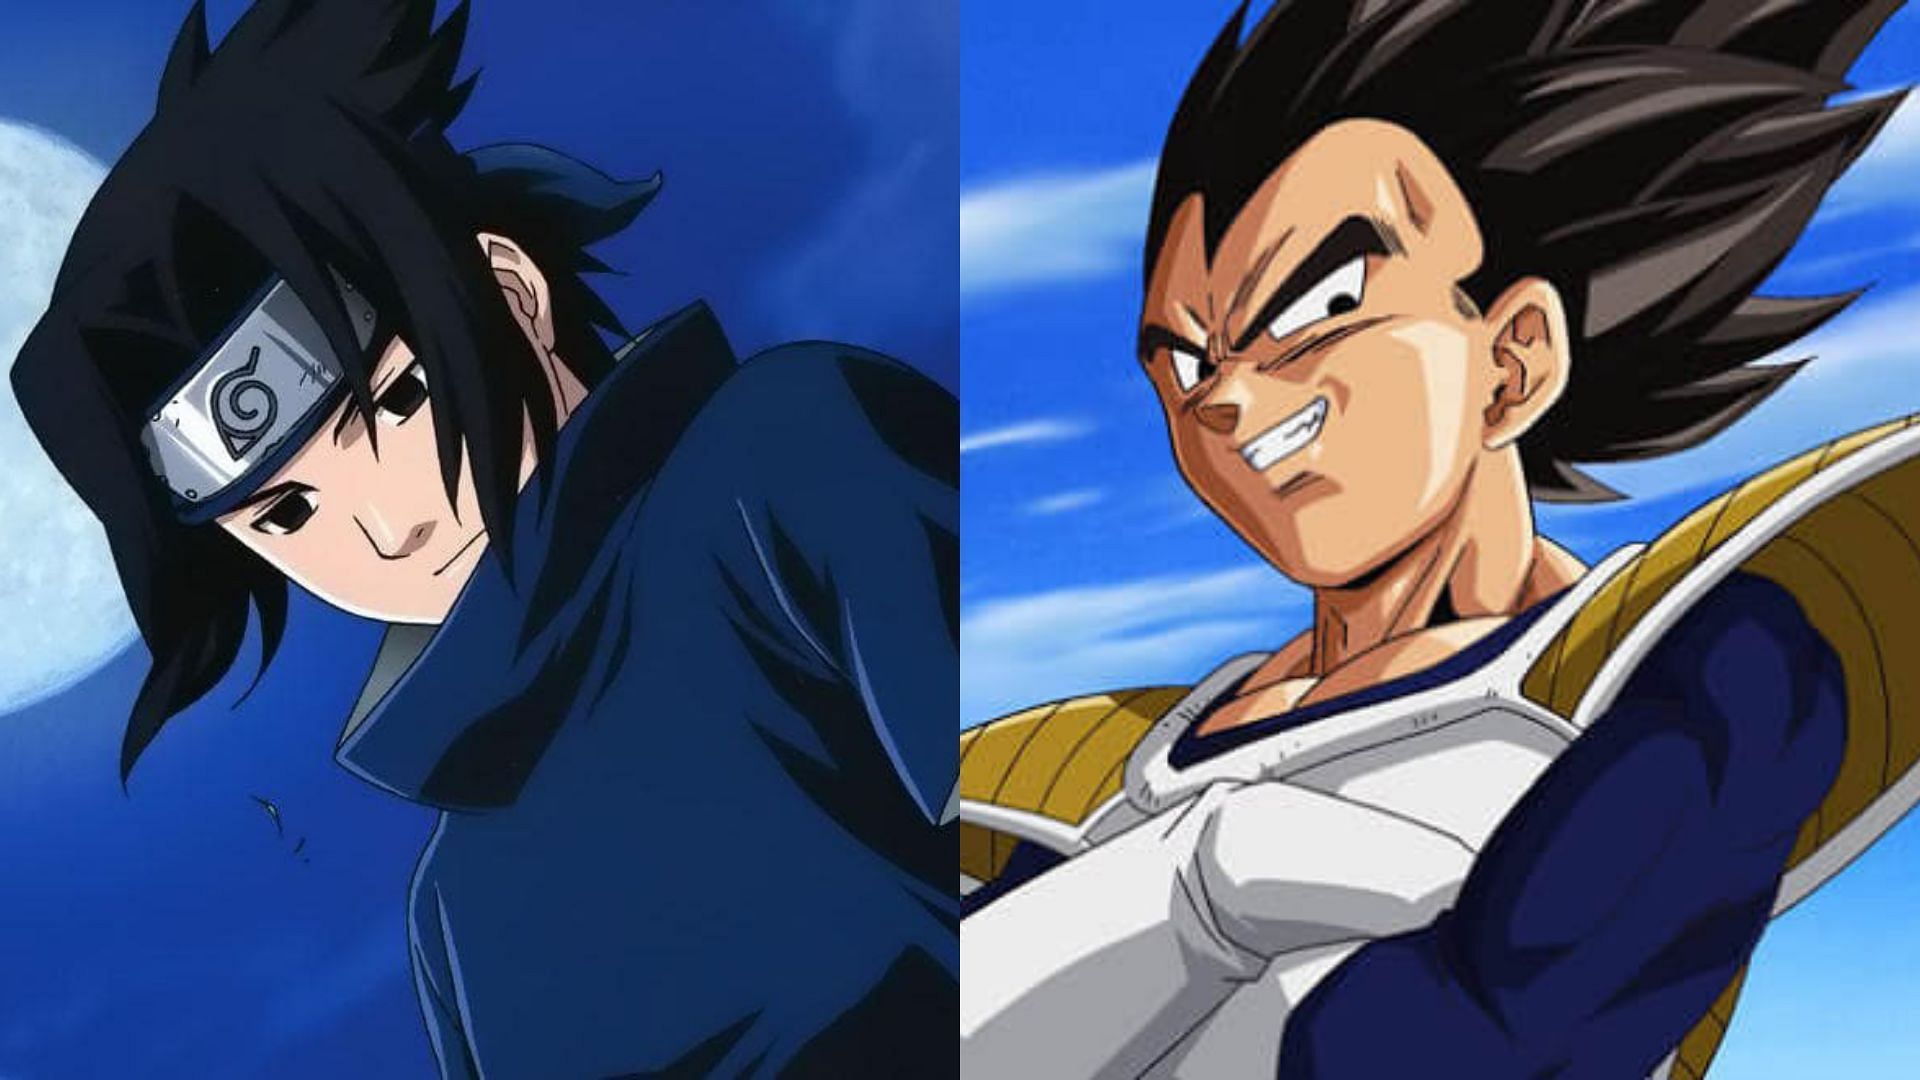 Sasuke Uchiha from the Naruto franchise and Vegeta from the Dragon Ball franchise (Image via Studio Pierrot, Toei Animation)